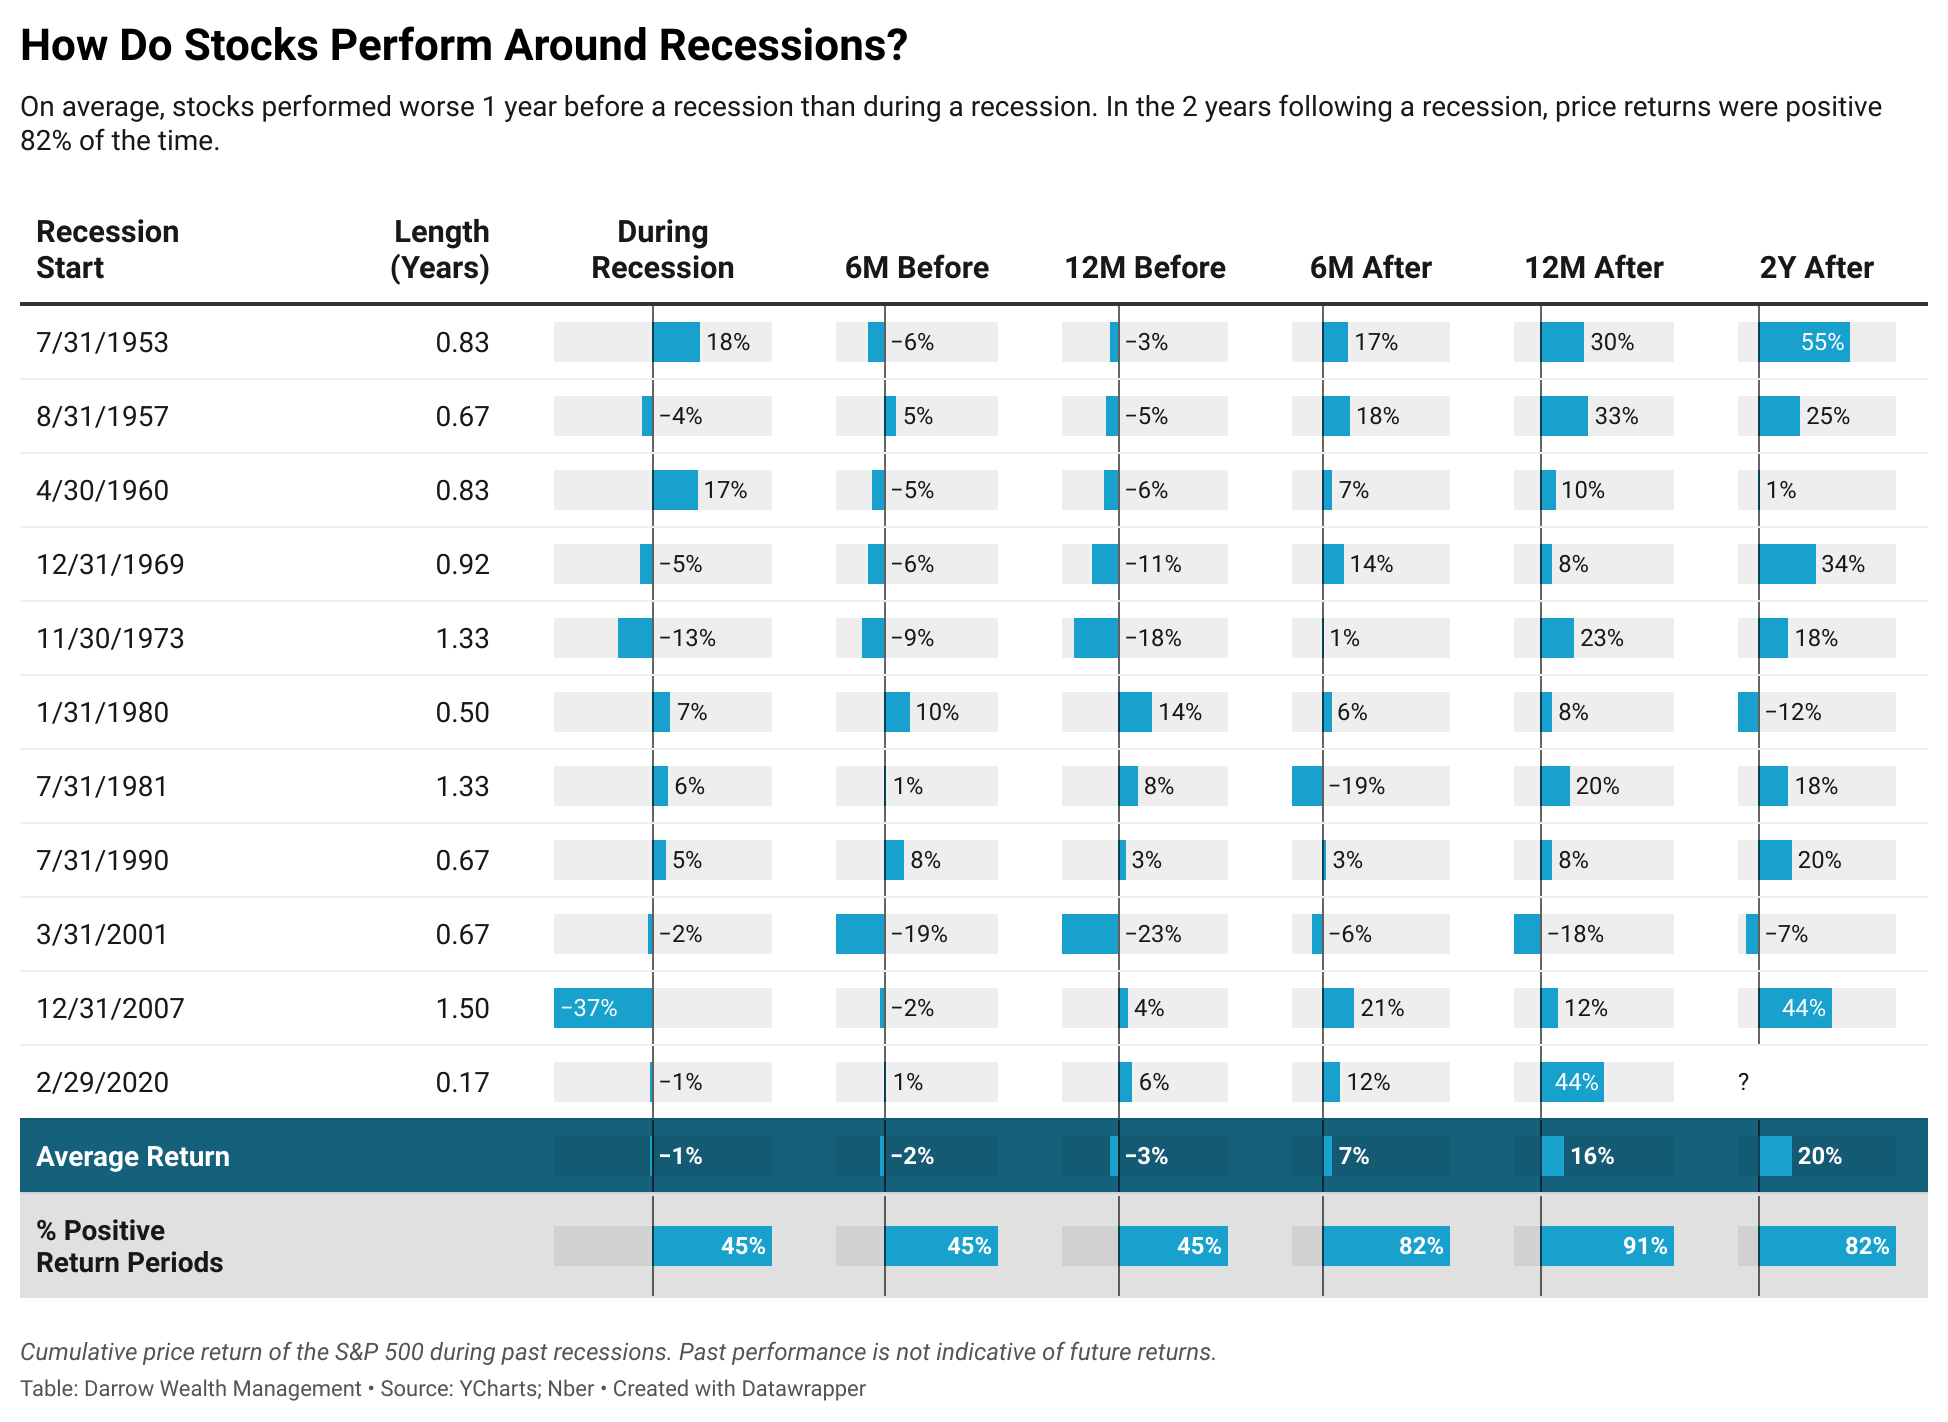 How do stocks perform around recessions